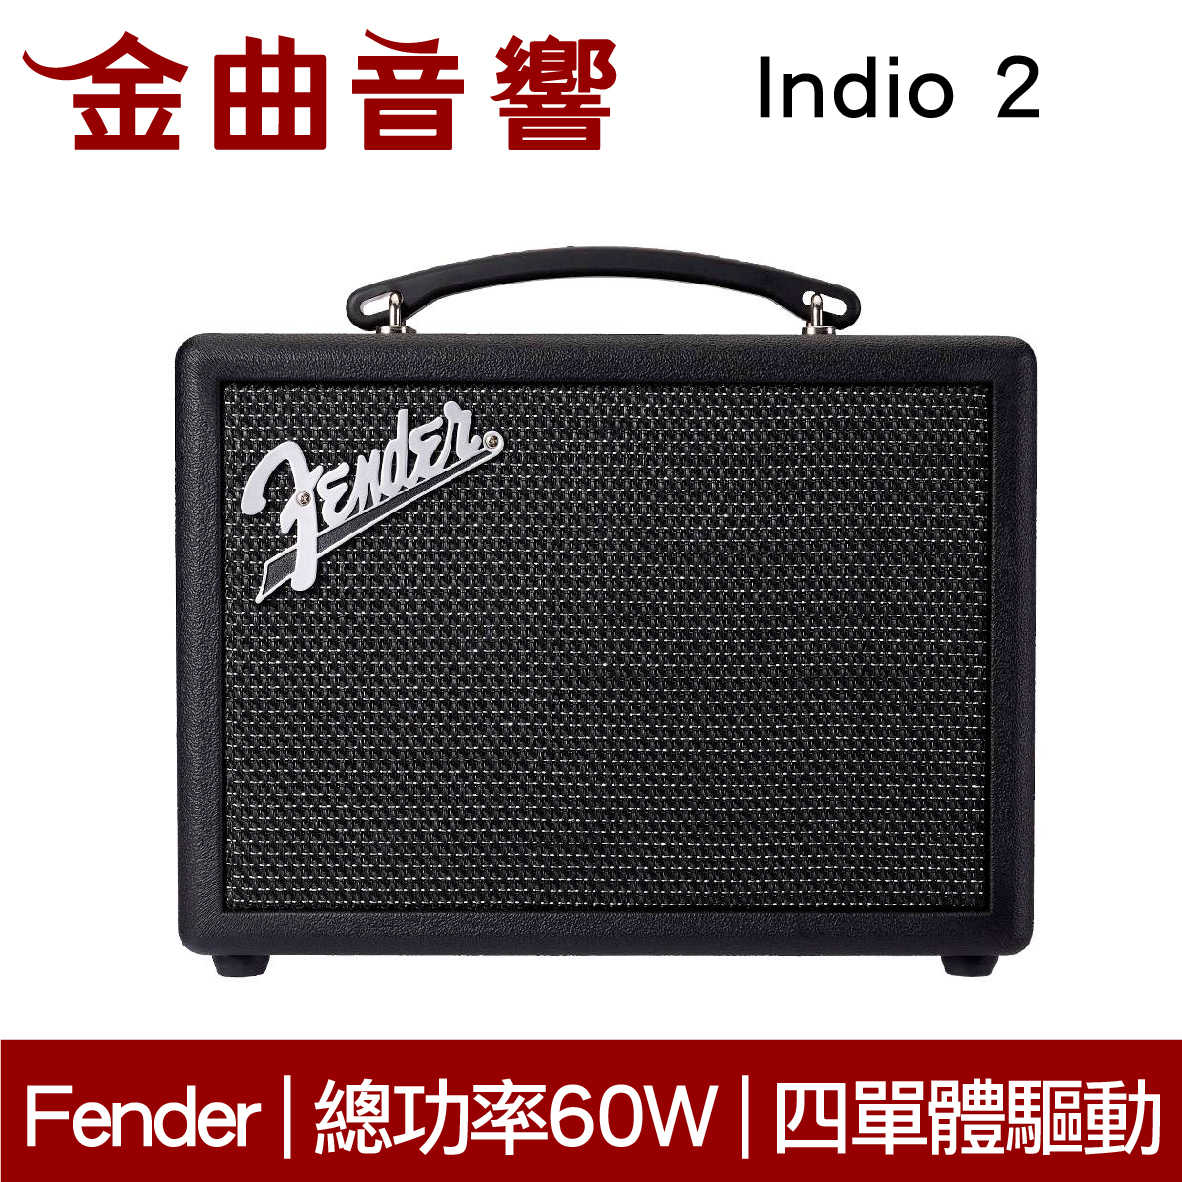 Fender Indio 2 黑色 二代升級 四單體驅動 高續航 無線 可攜帶 藍牙喇叭 | 金曲音響